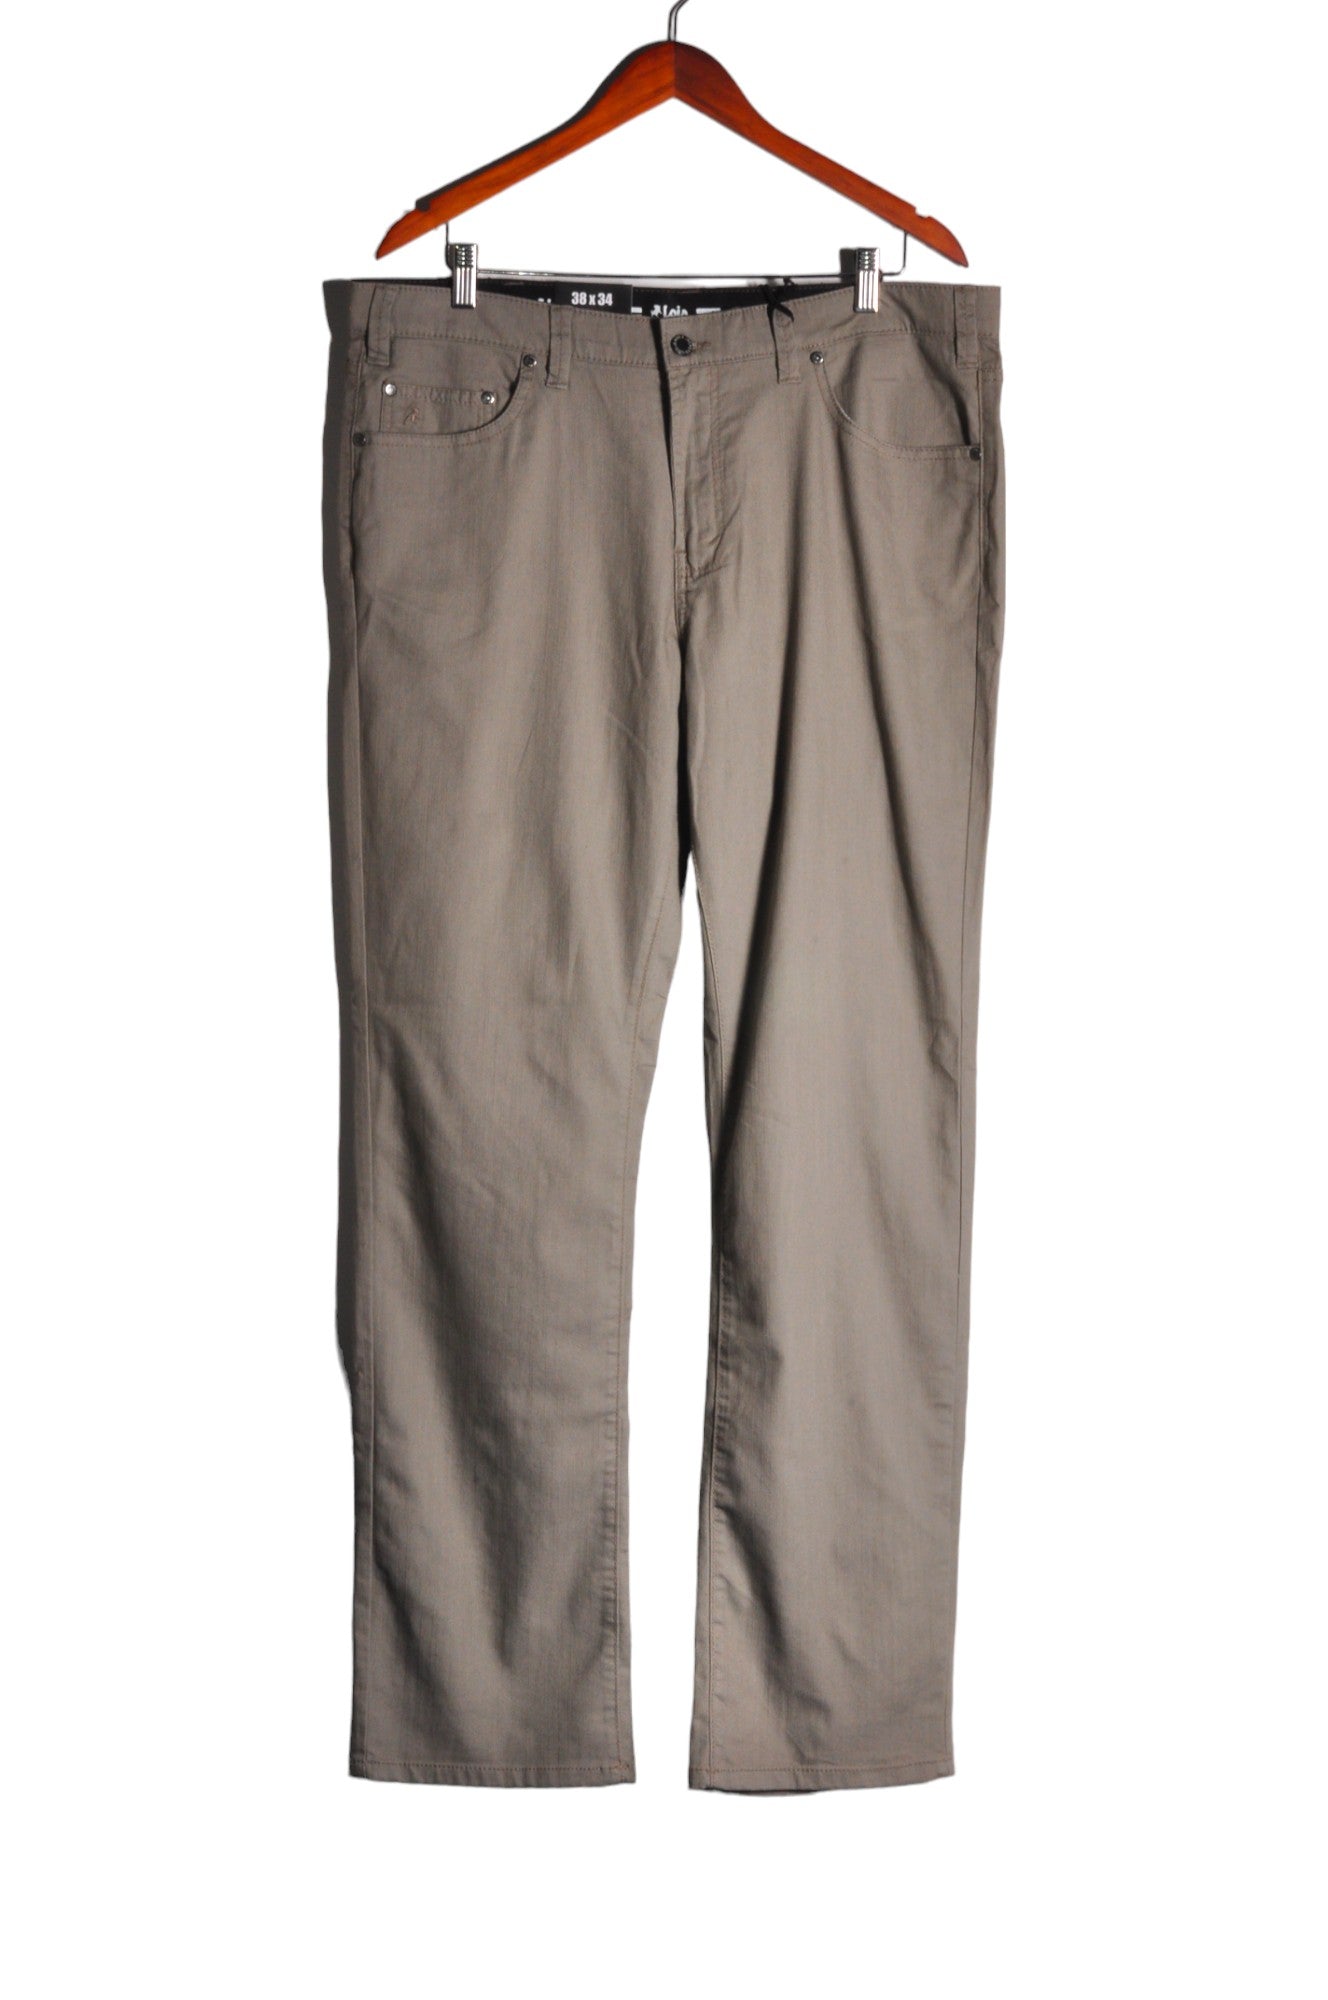 LOIS Men Work Pants Regular fit in Gray - Size 38x34 | 35 $ KOOP